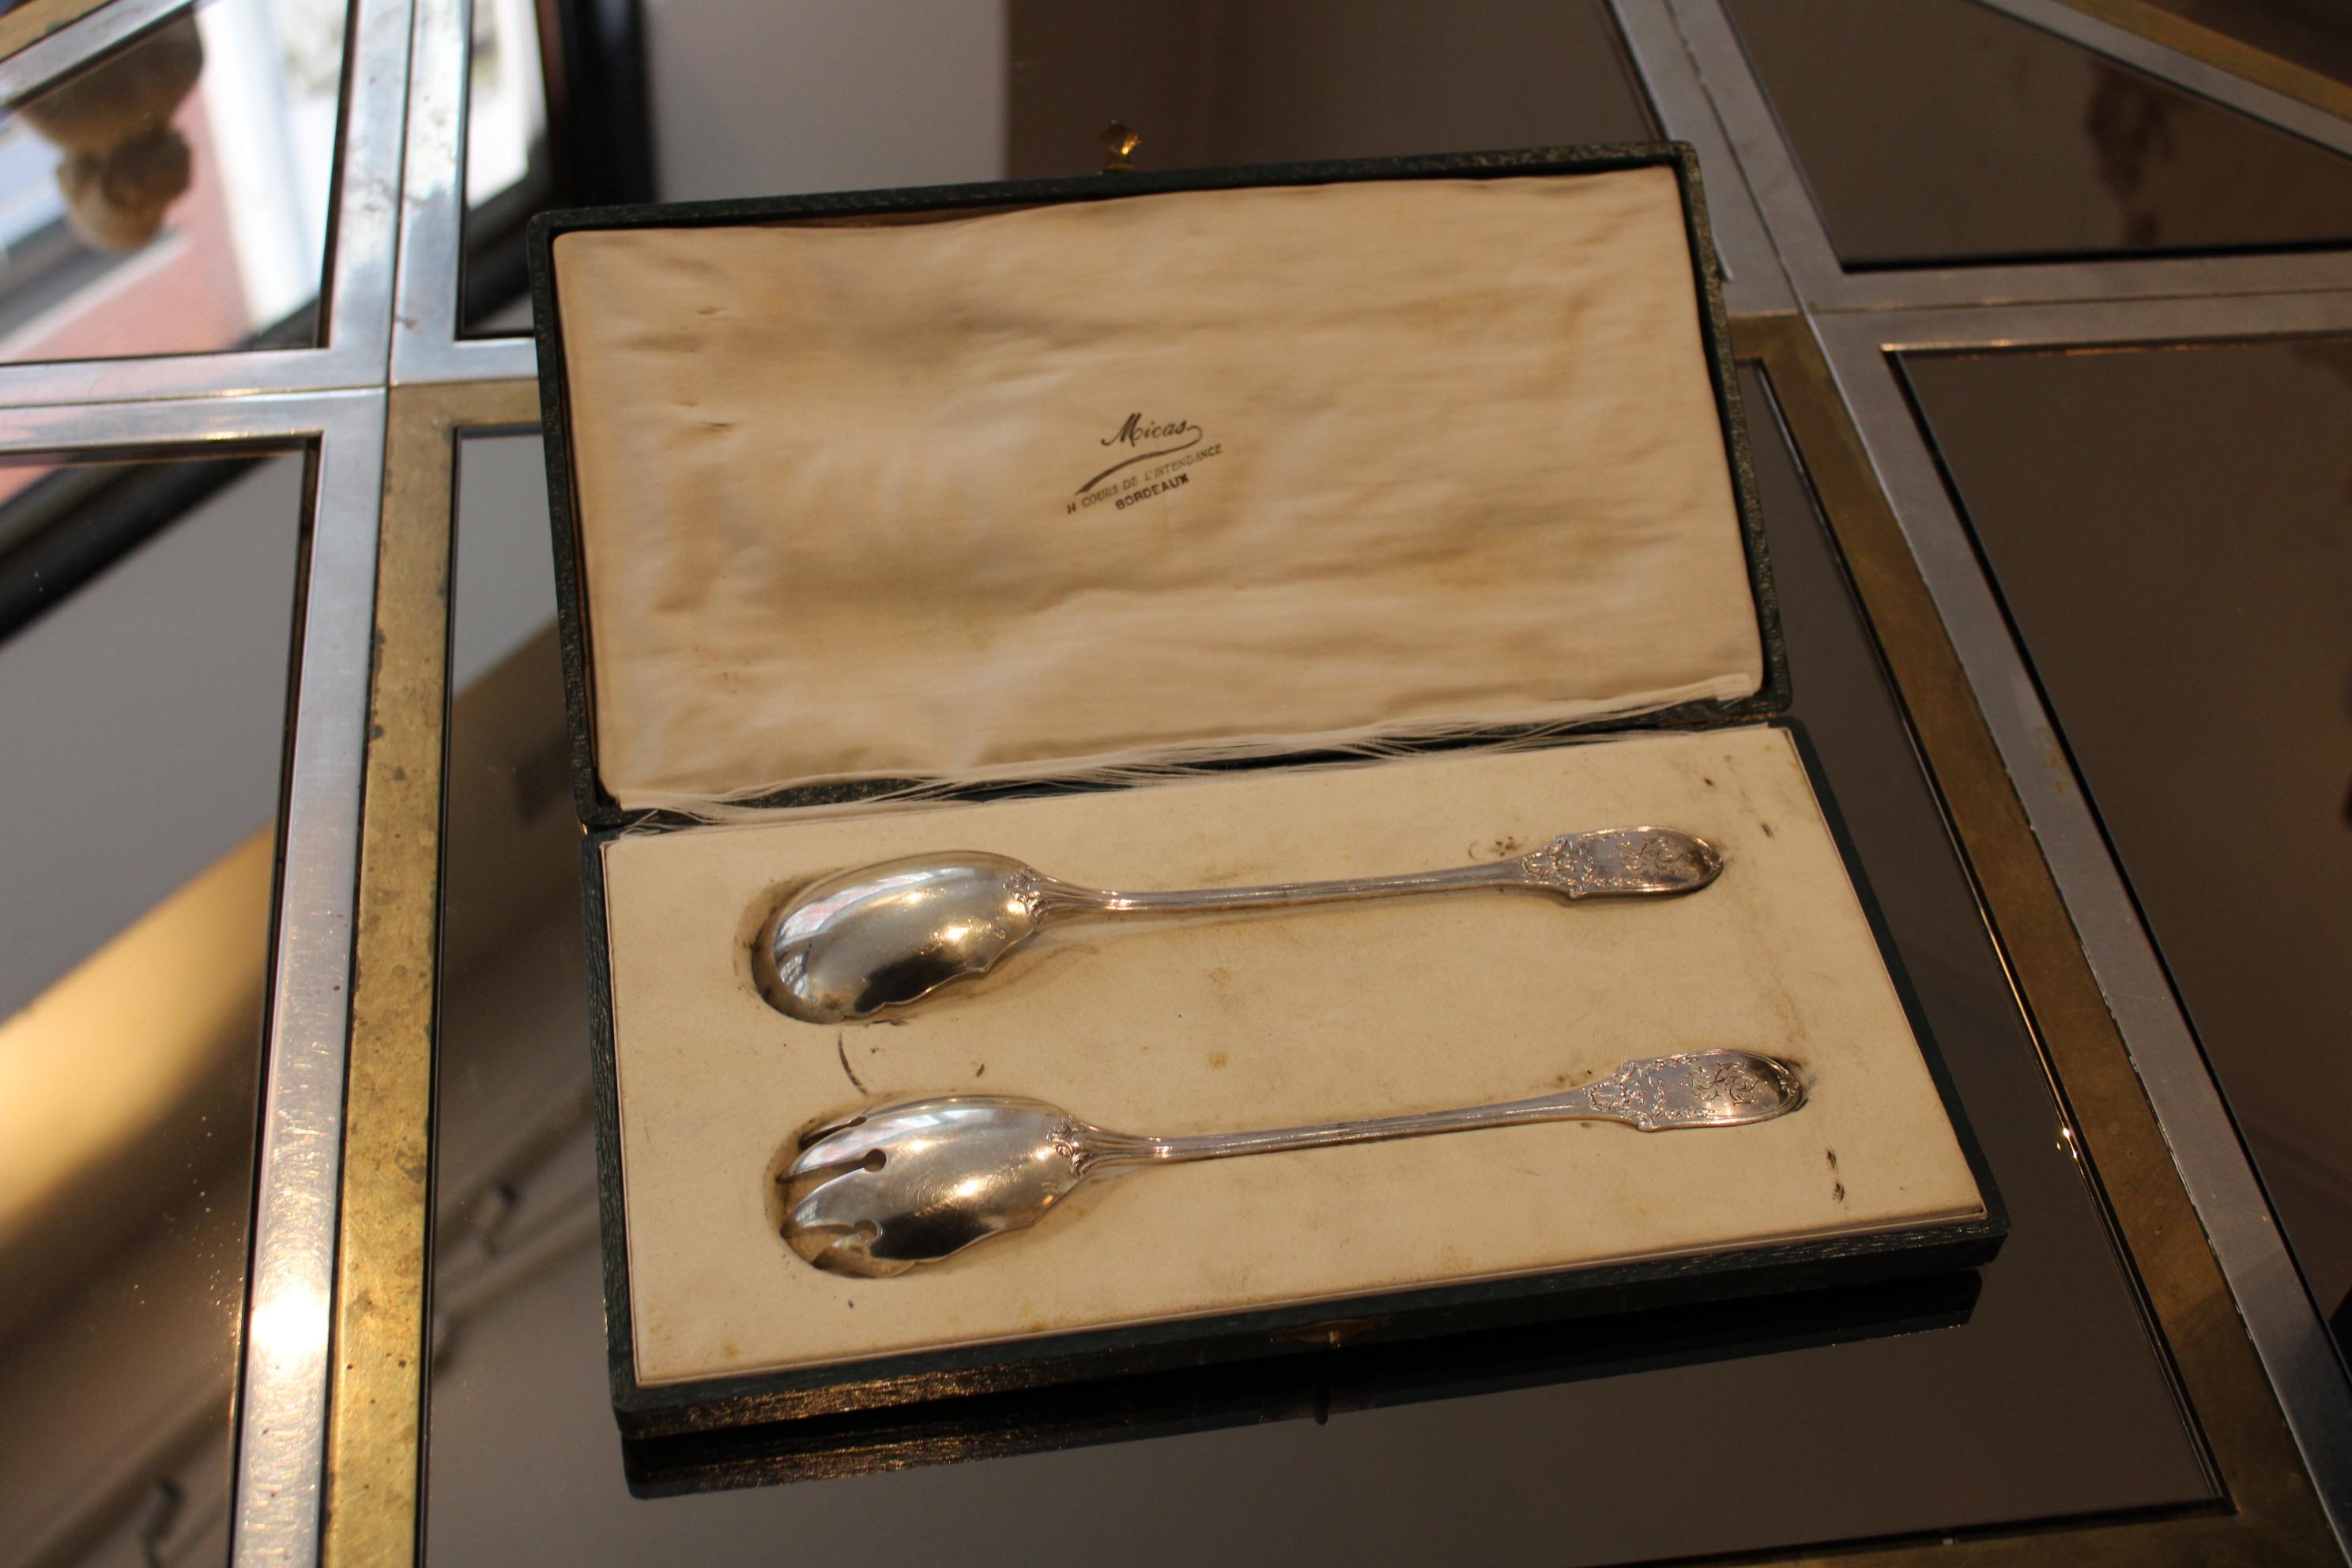 Solid silver cutlery in their box.
Hallmark Minerva
